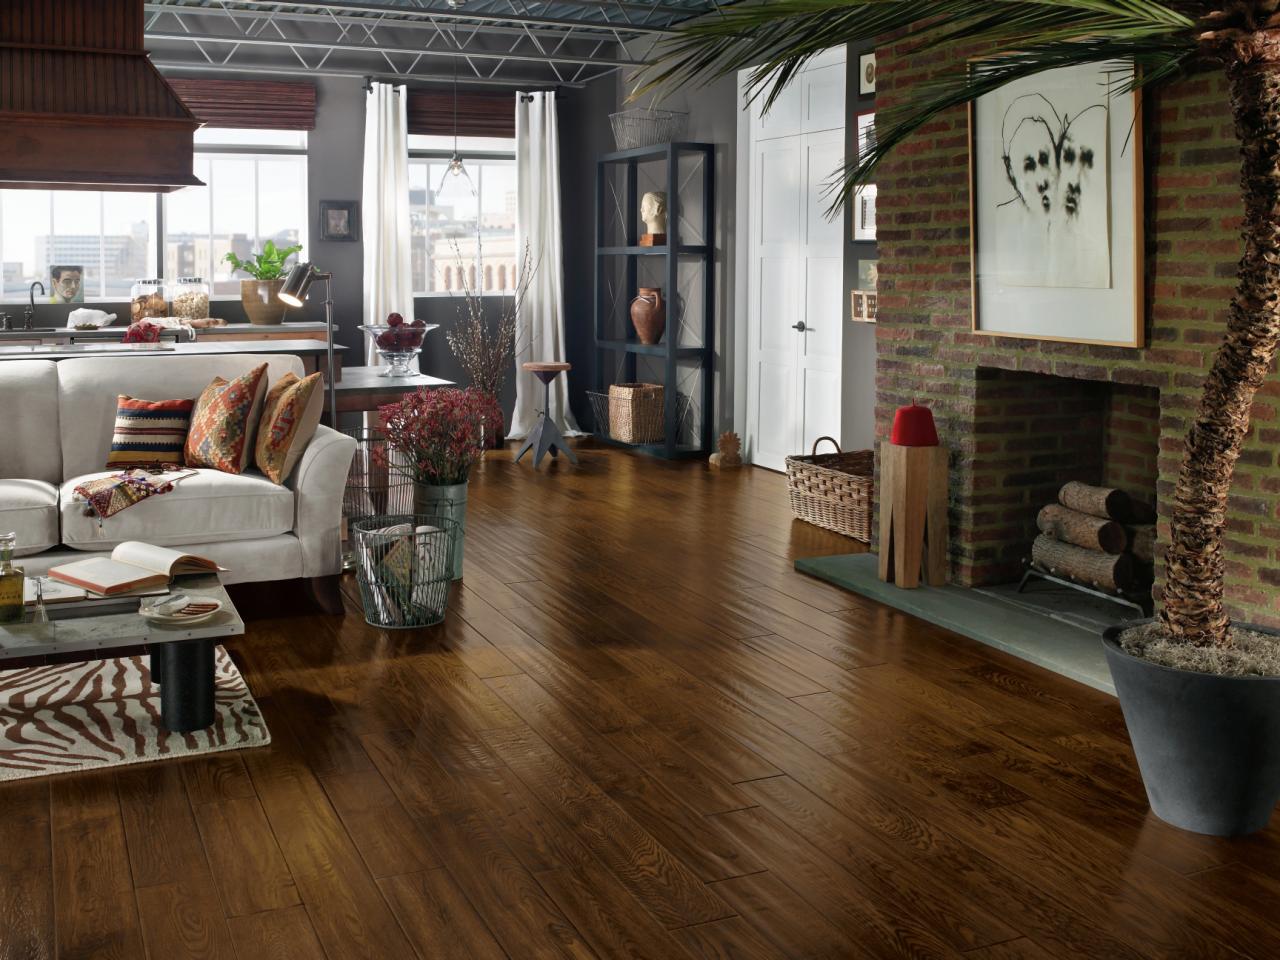 Top Living Room Flooring Options, Living Room Paint Ideas With Hardwood Floors